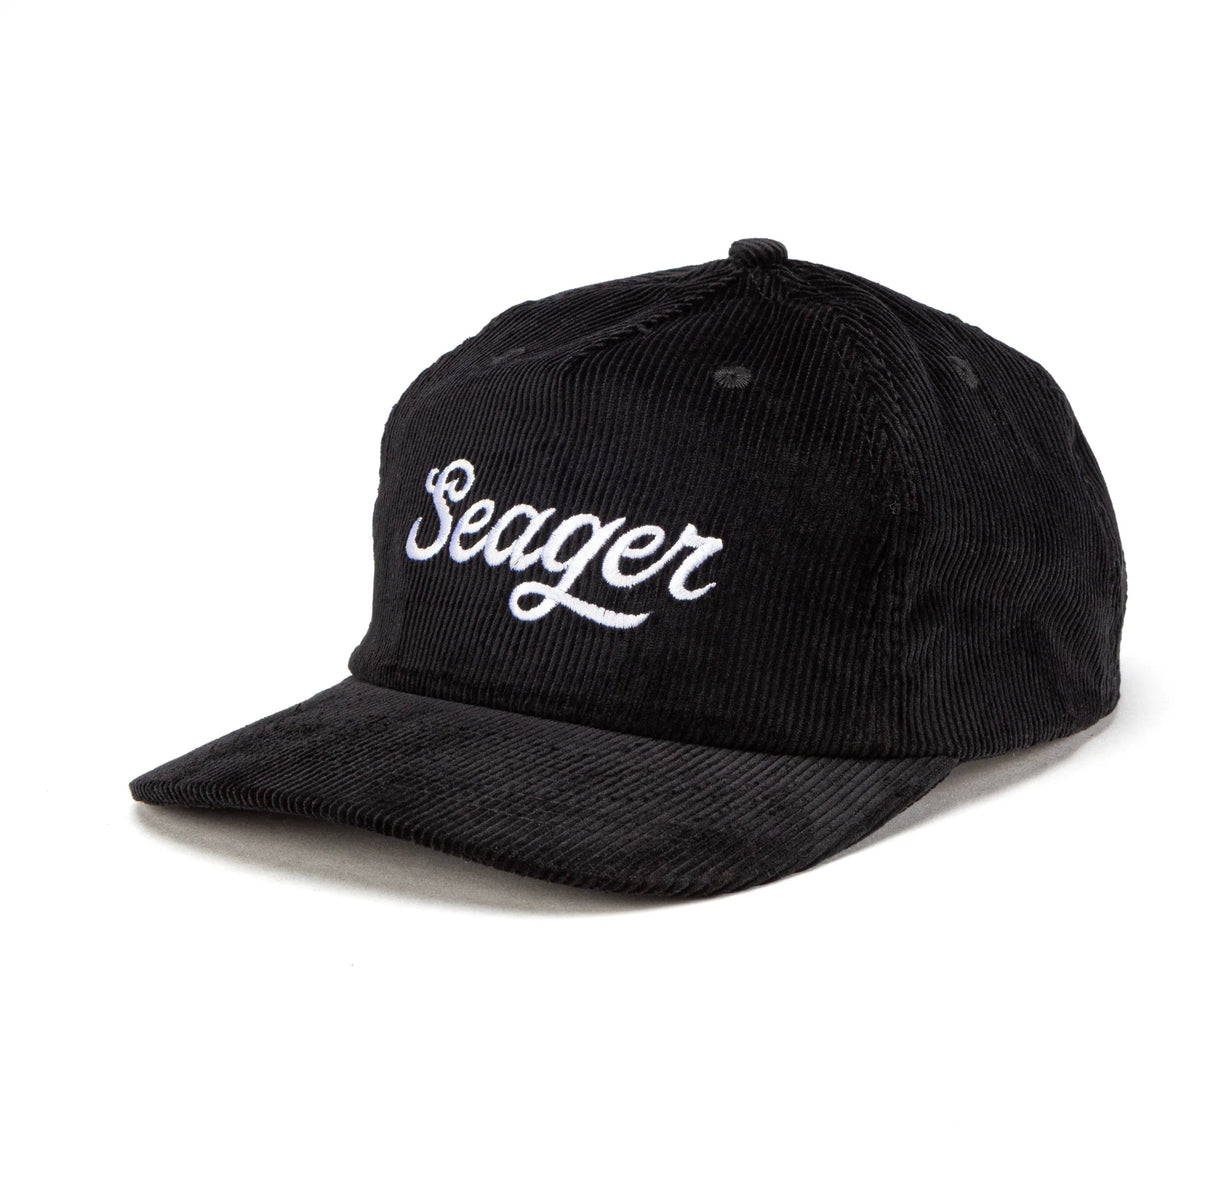 Seager Big Black Corduroy Snapback Hat